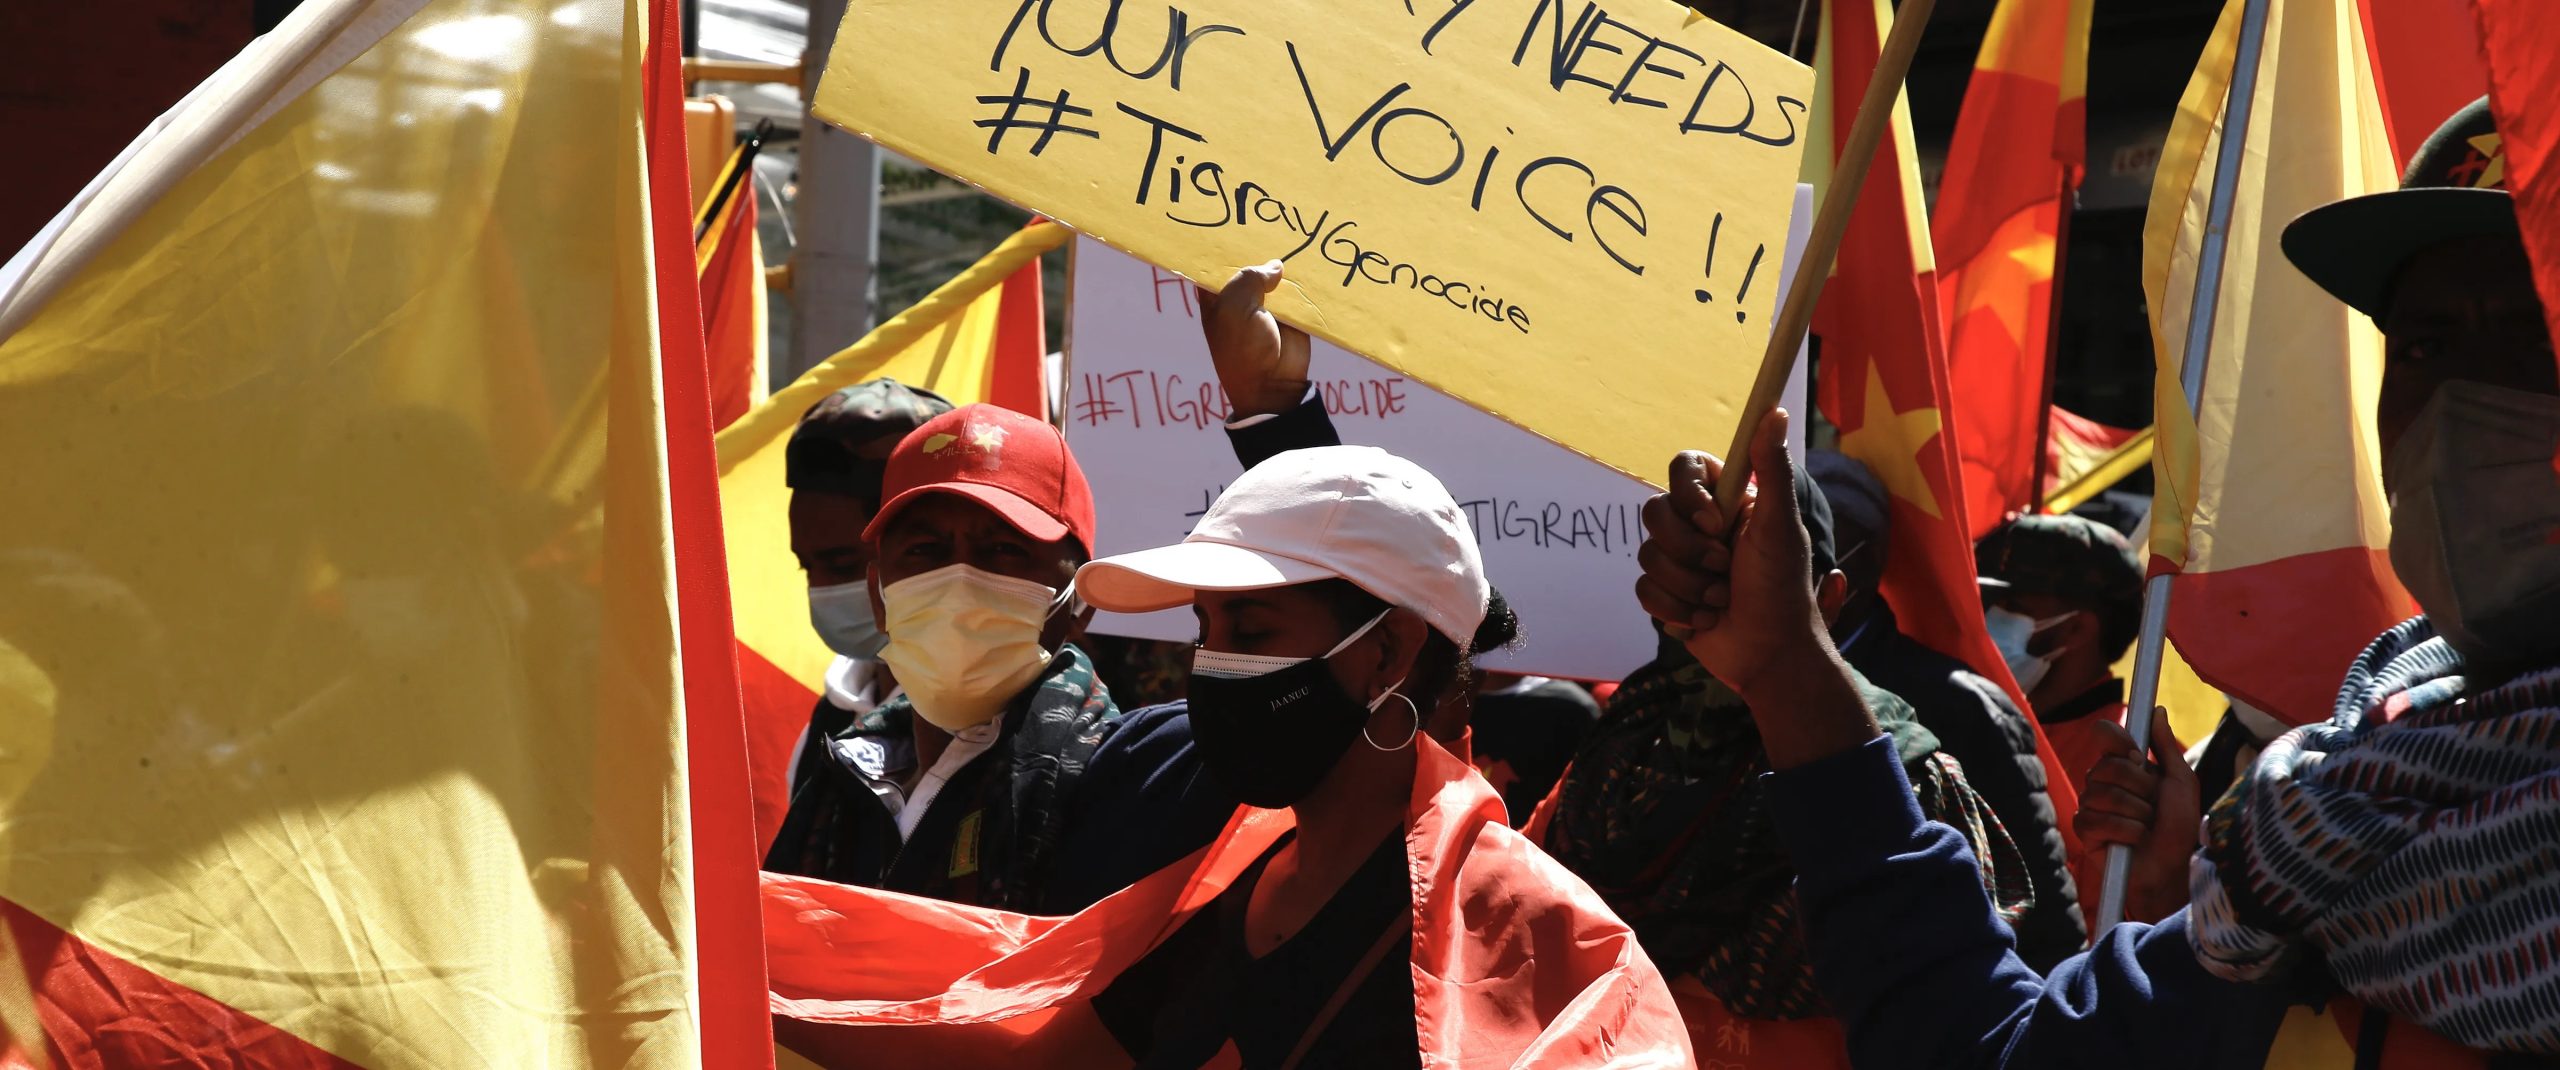 Ethiopian diaspora groups organize click-to-tweet Tigray campaigns amid information scarcity